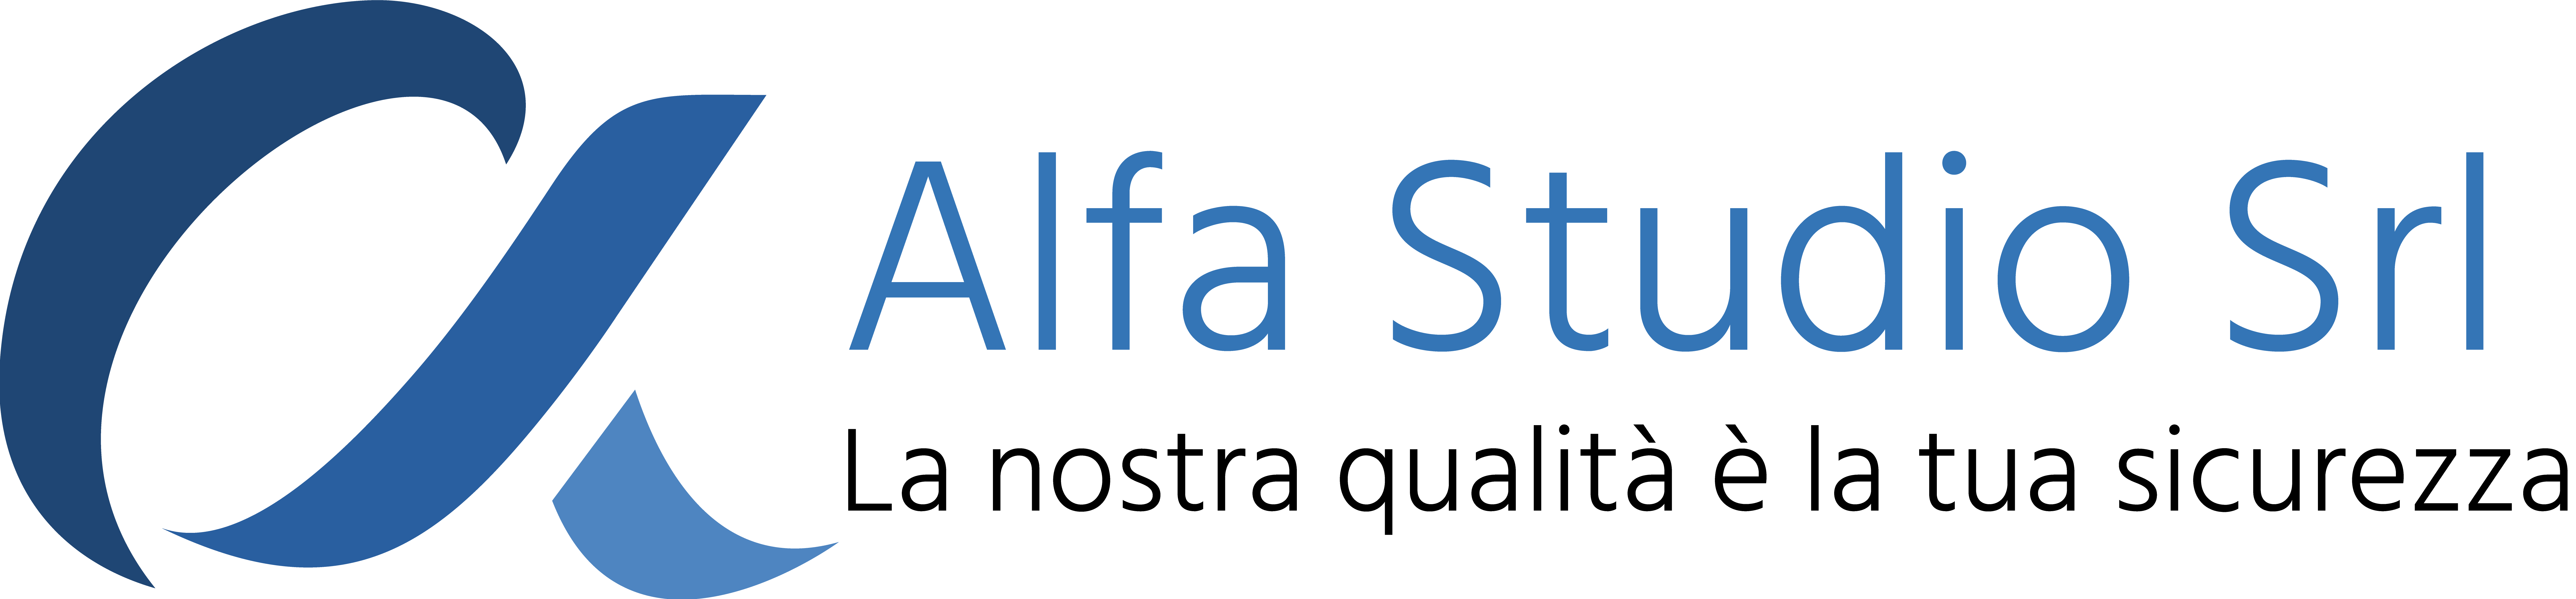 Alfa Studio Srl